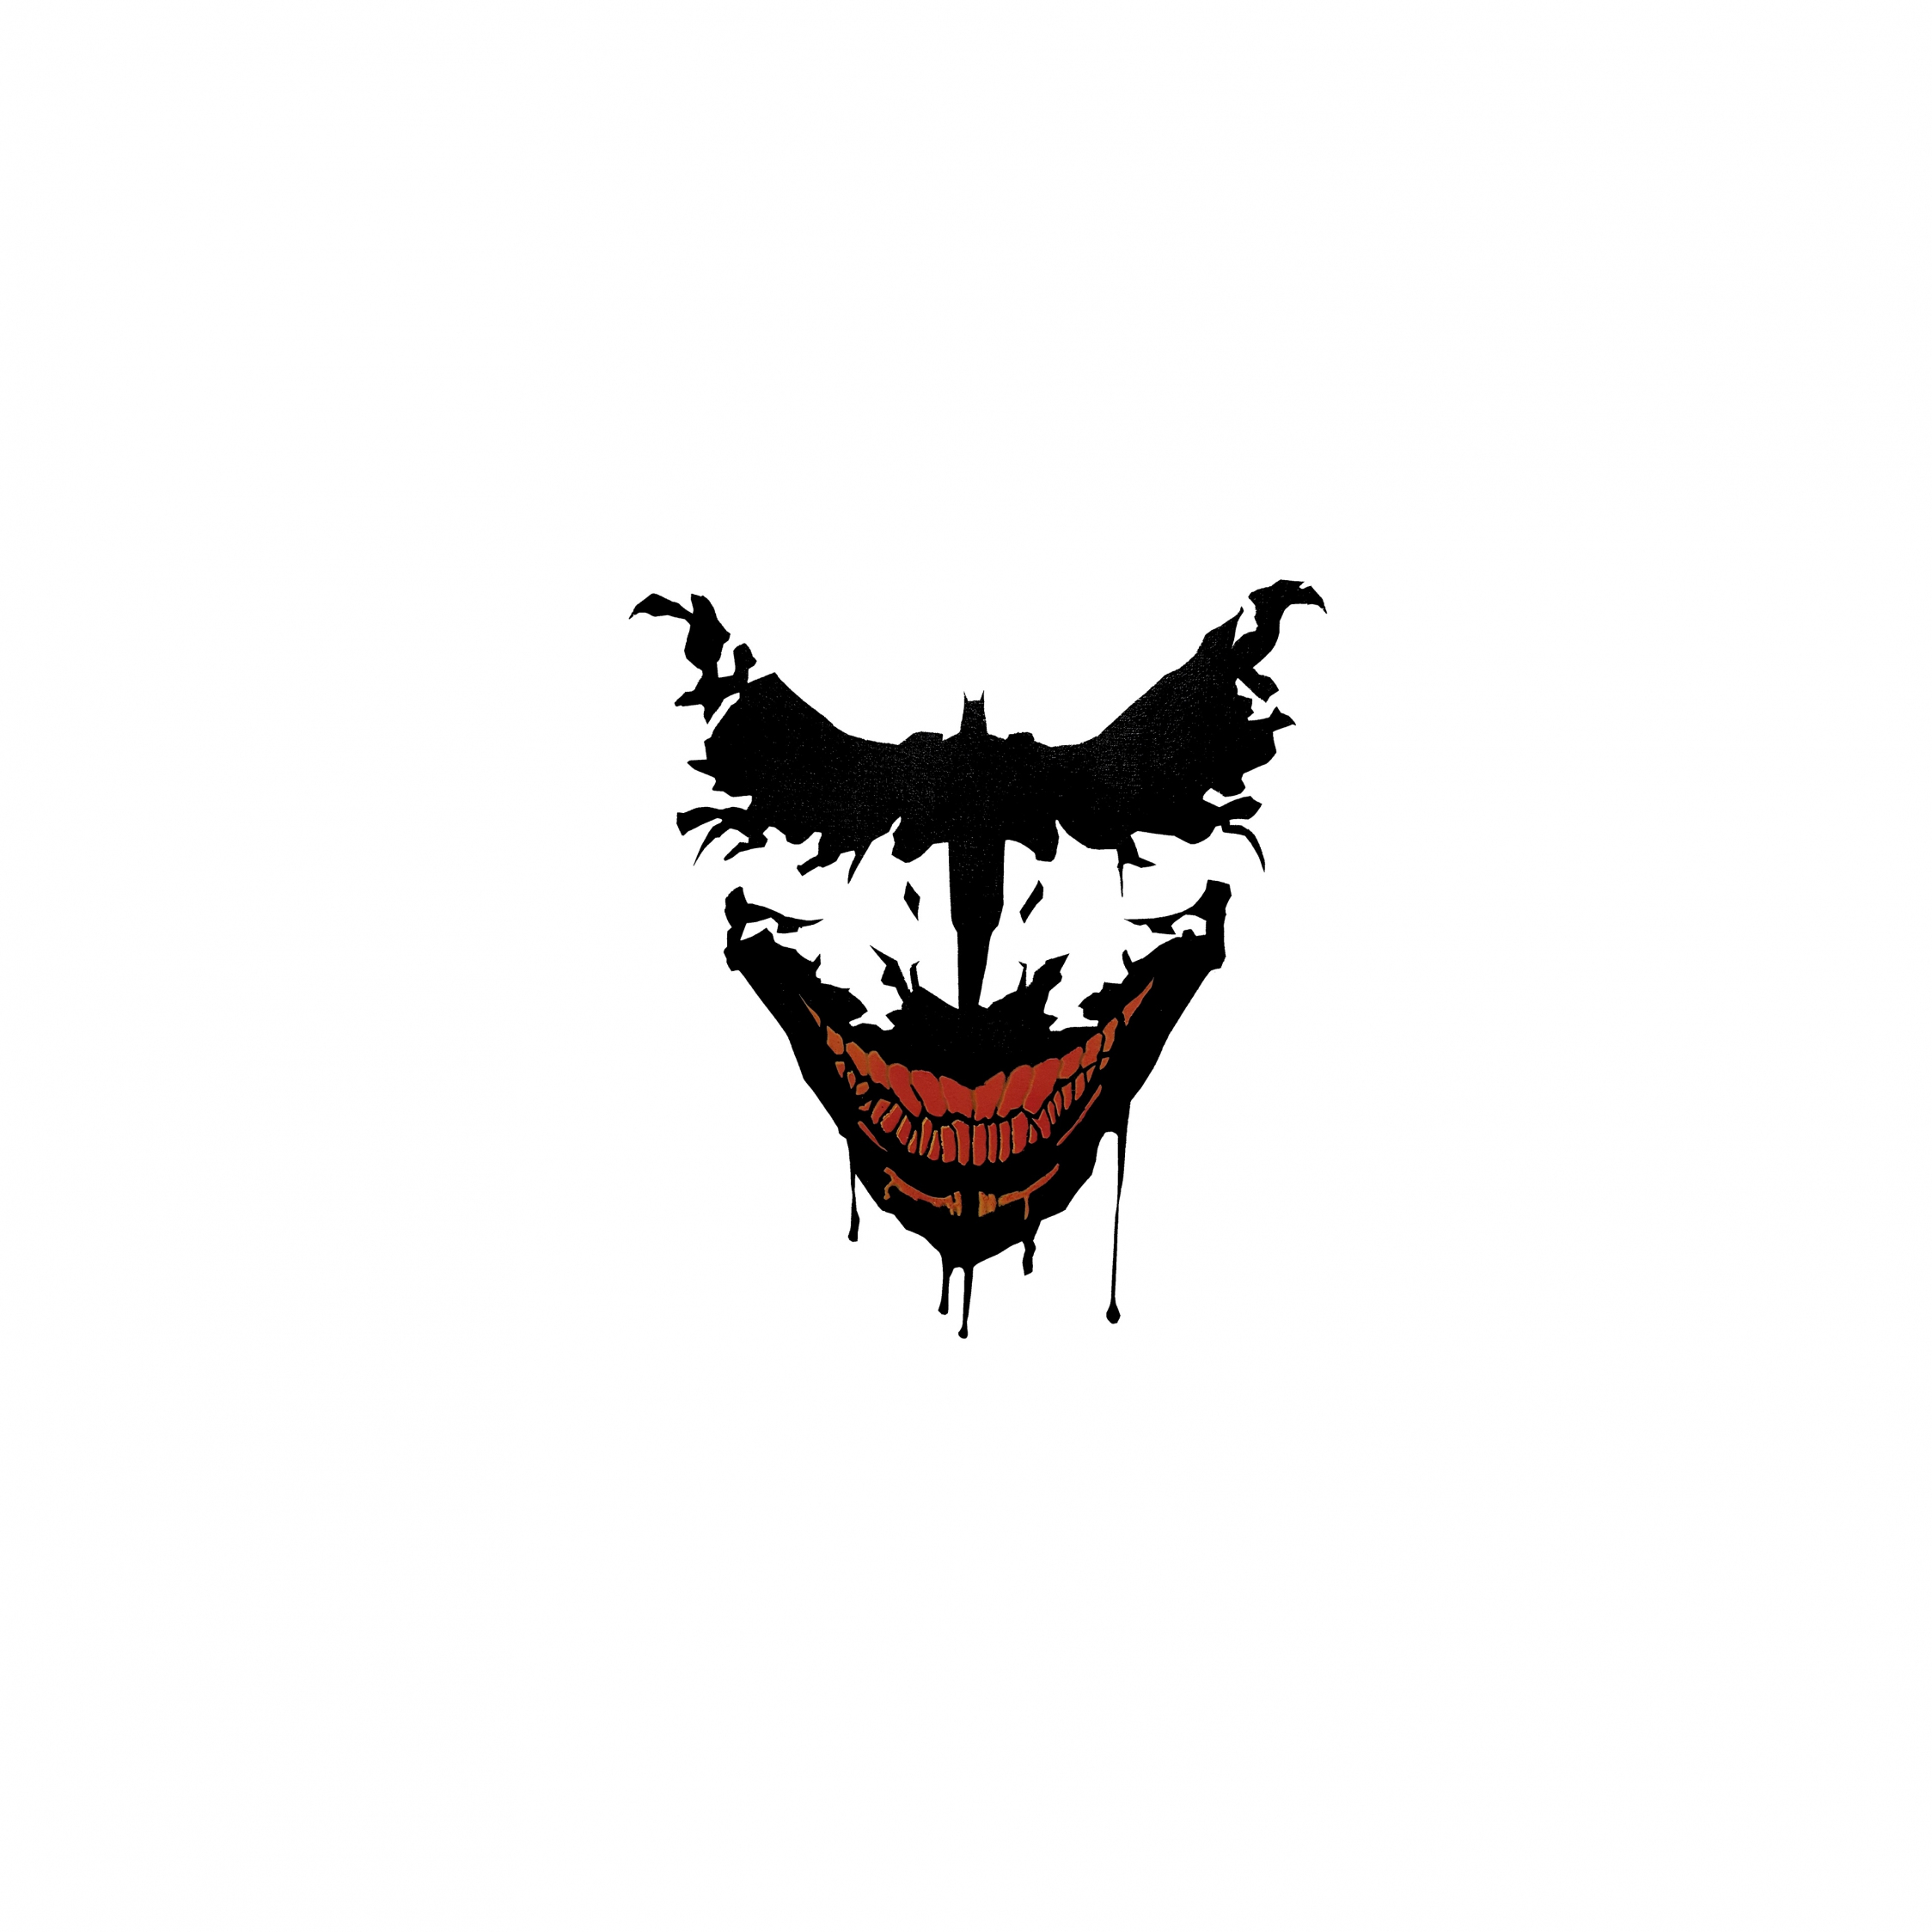 Joker Wallpaper For Ipad - The Joker The Dark Knight Wallpapers ...